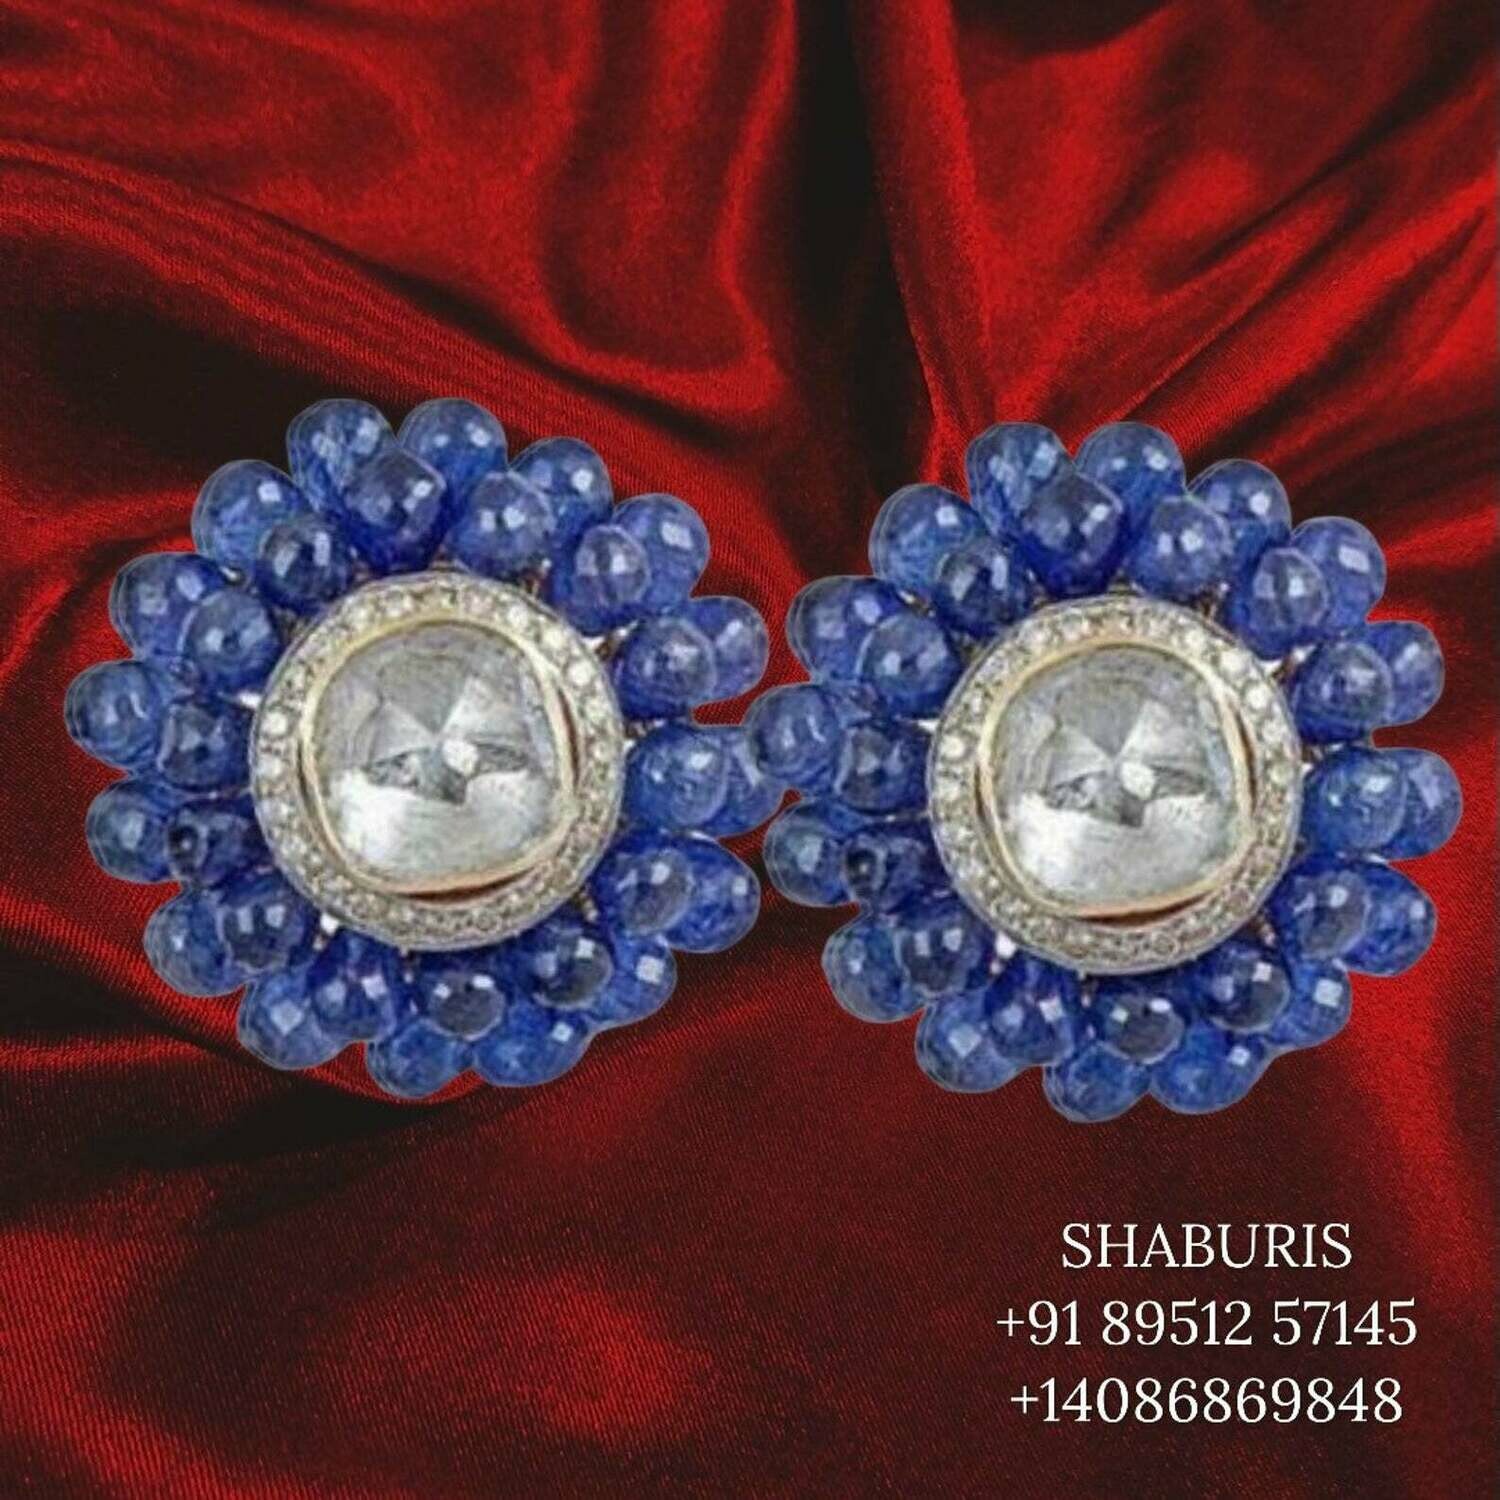 Latest Indian Jewelry,Pure Silver Jewellery Indian ,Lyte Weight Jewelry,Studs,Earrings,Indian Bridal,Indian Wedding Jewelry-NIHIRA-SHABURIS